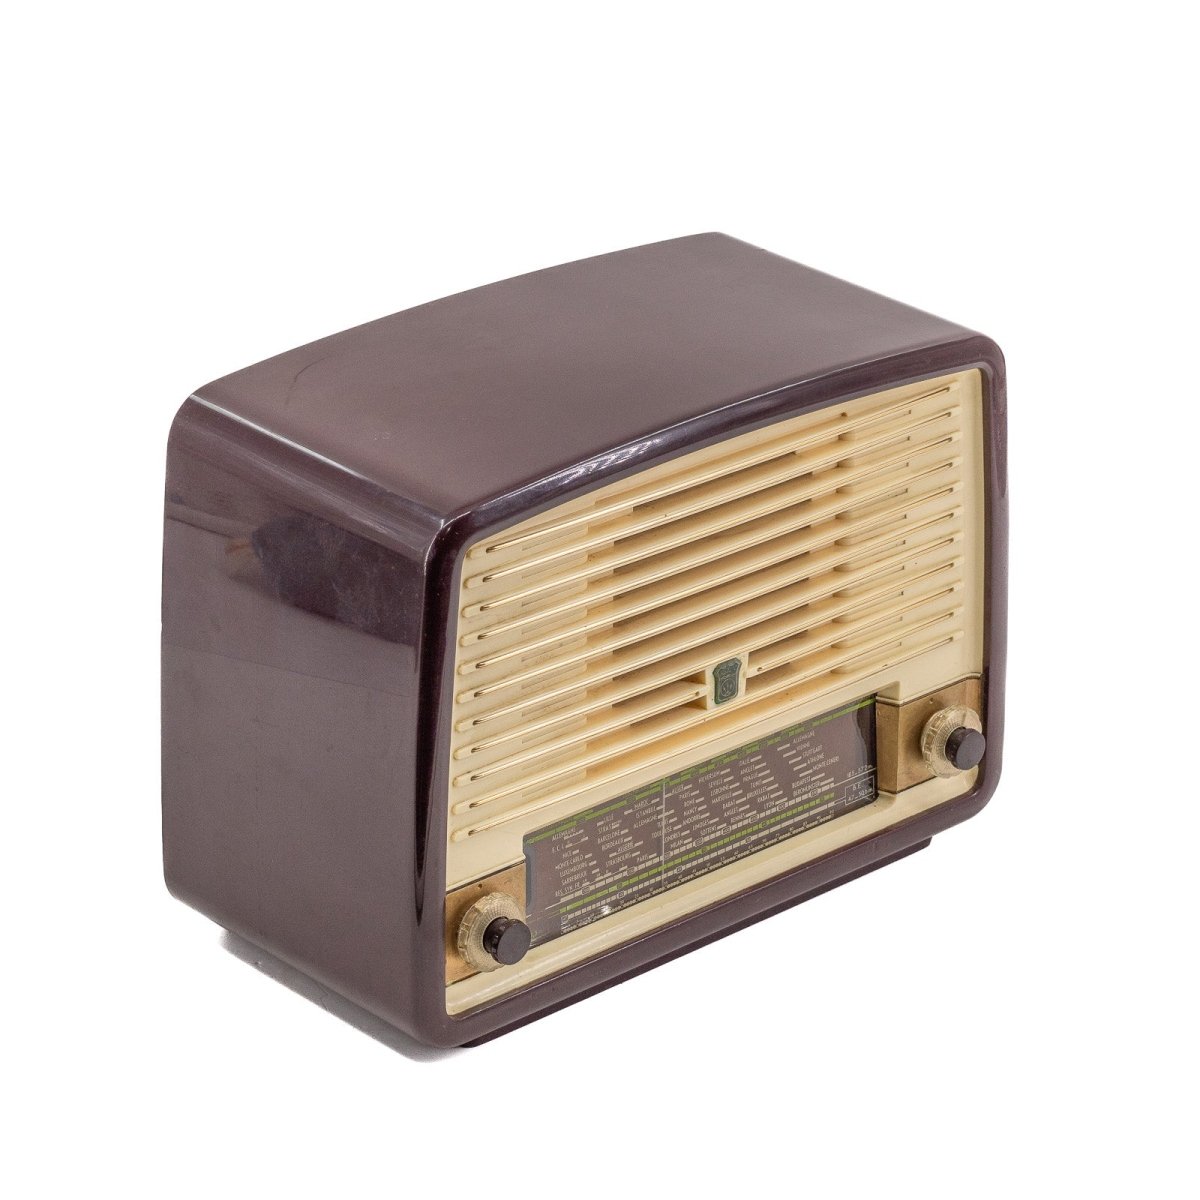 Radio Bluetooth Radiola Vintage 50’S enceinte connectée française haut de gamme absolument prodige radio vintage